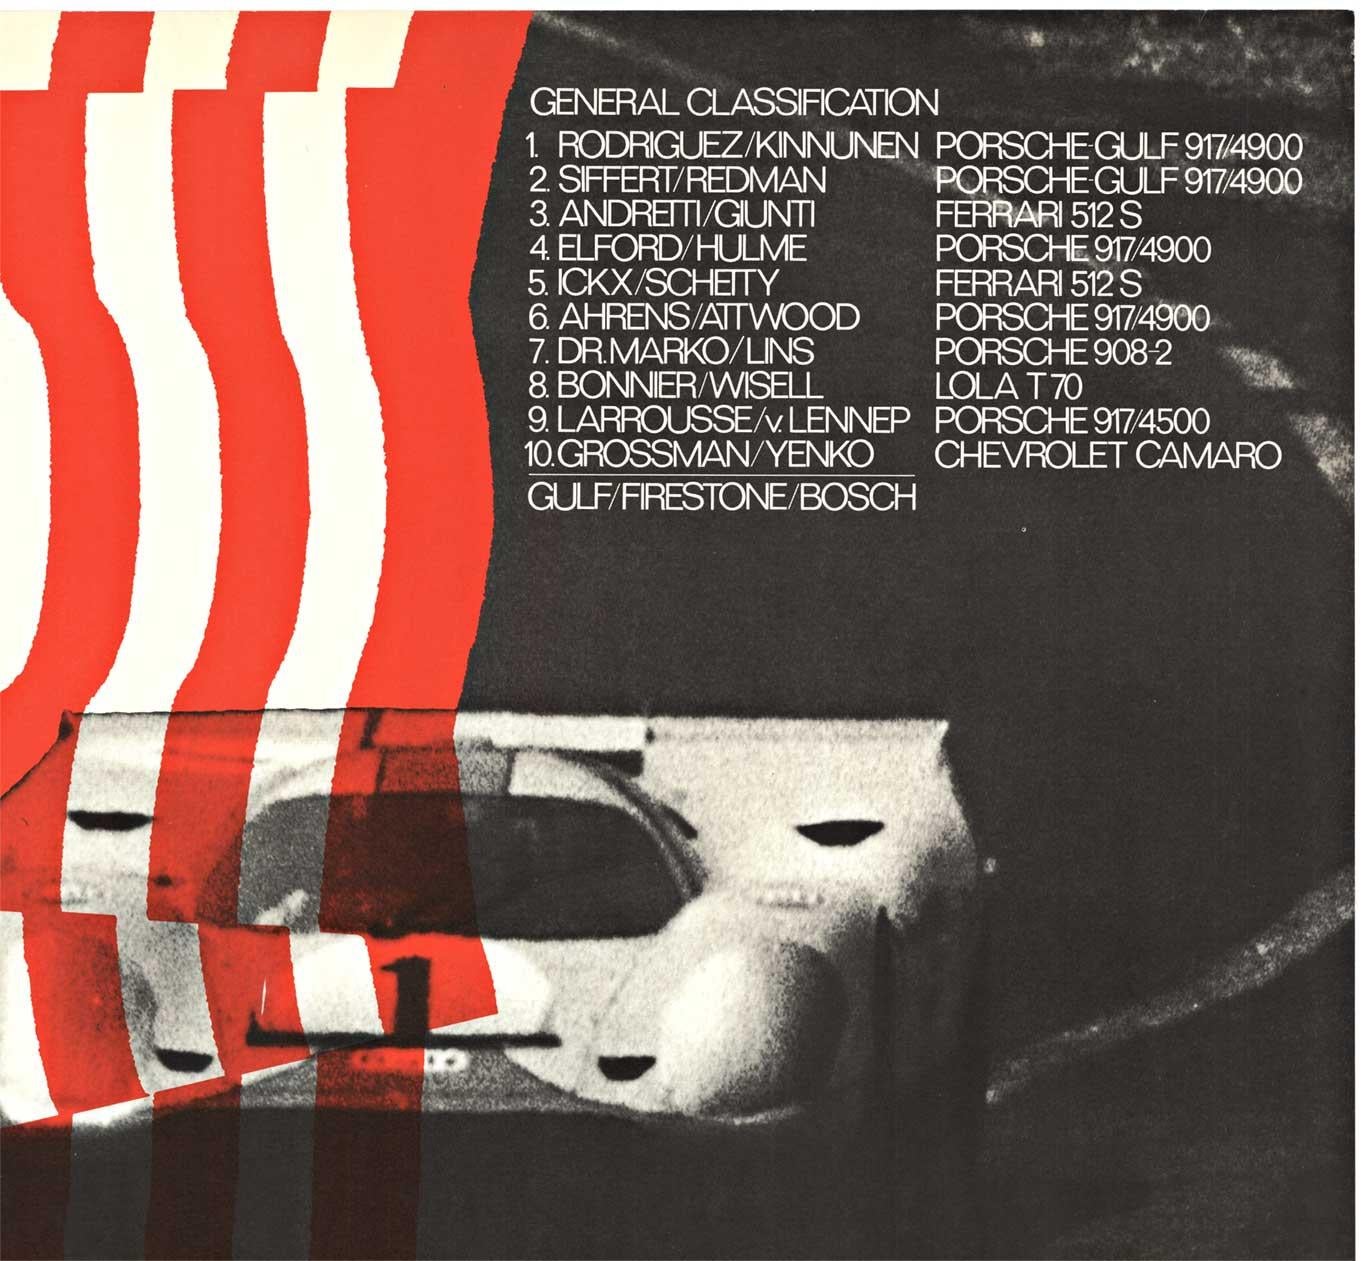 Original Porsche Six Hours of Watkins Glen, 1970 vintage factory poster - Print by Eric Strenger